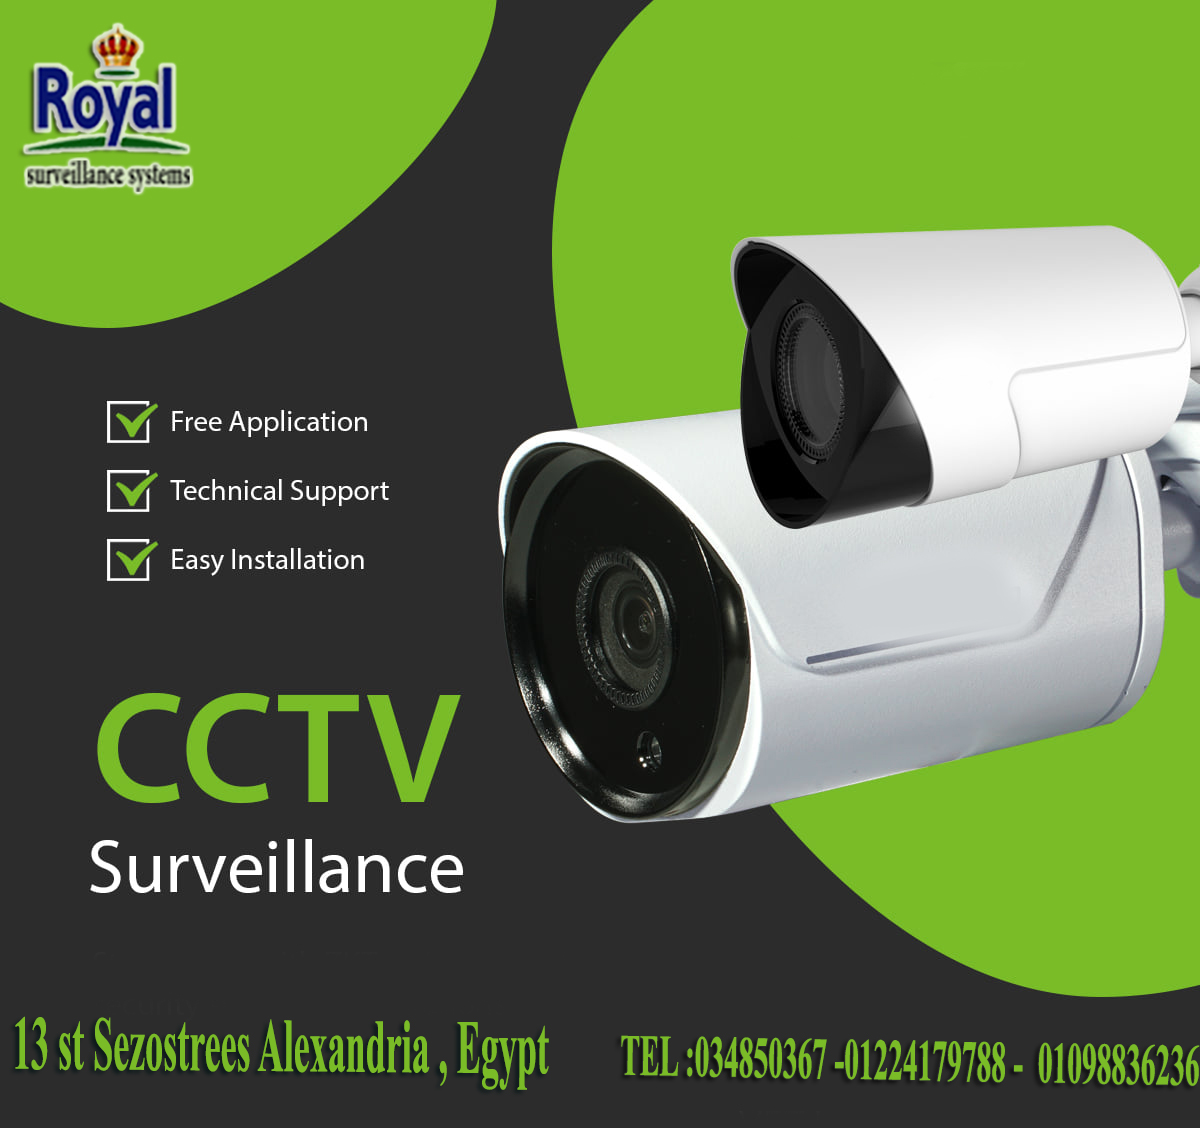 Royal surveillance systems